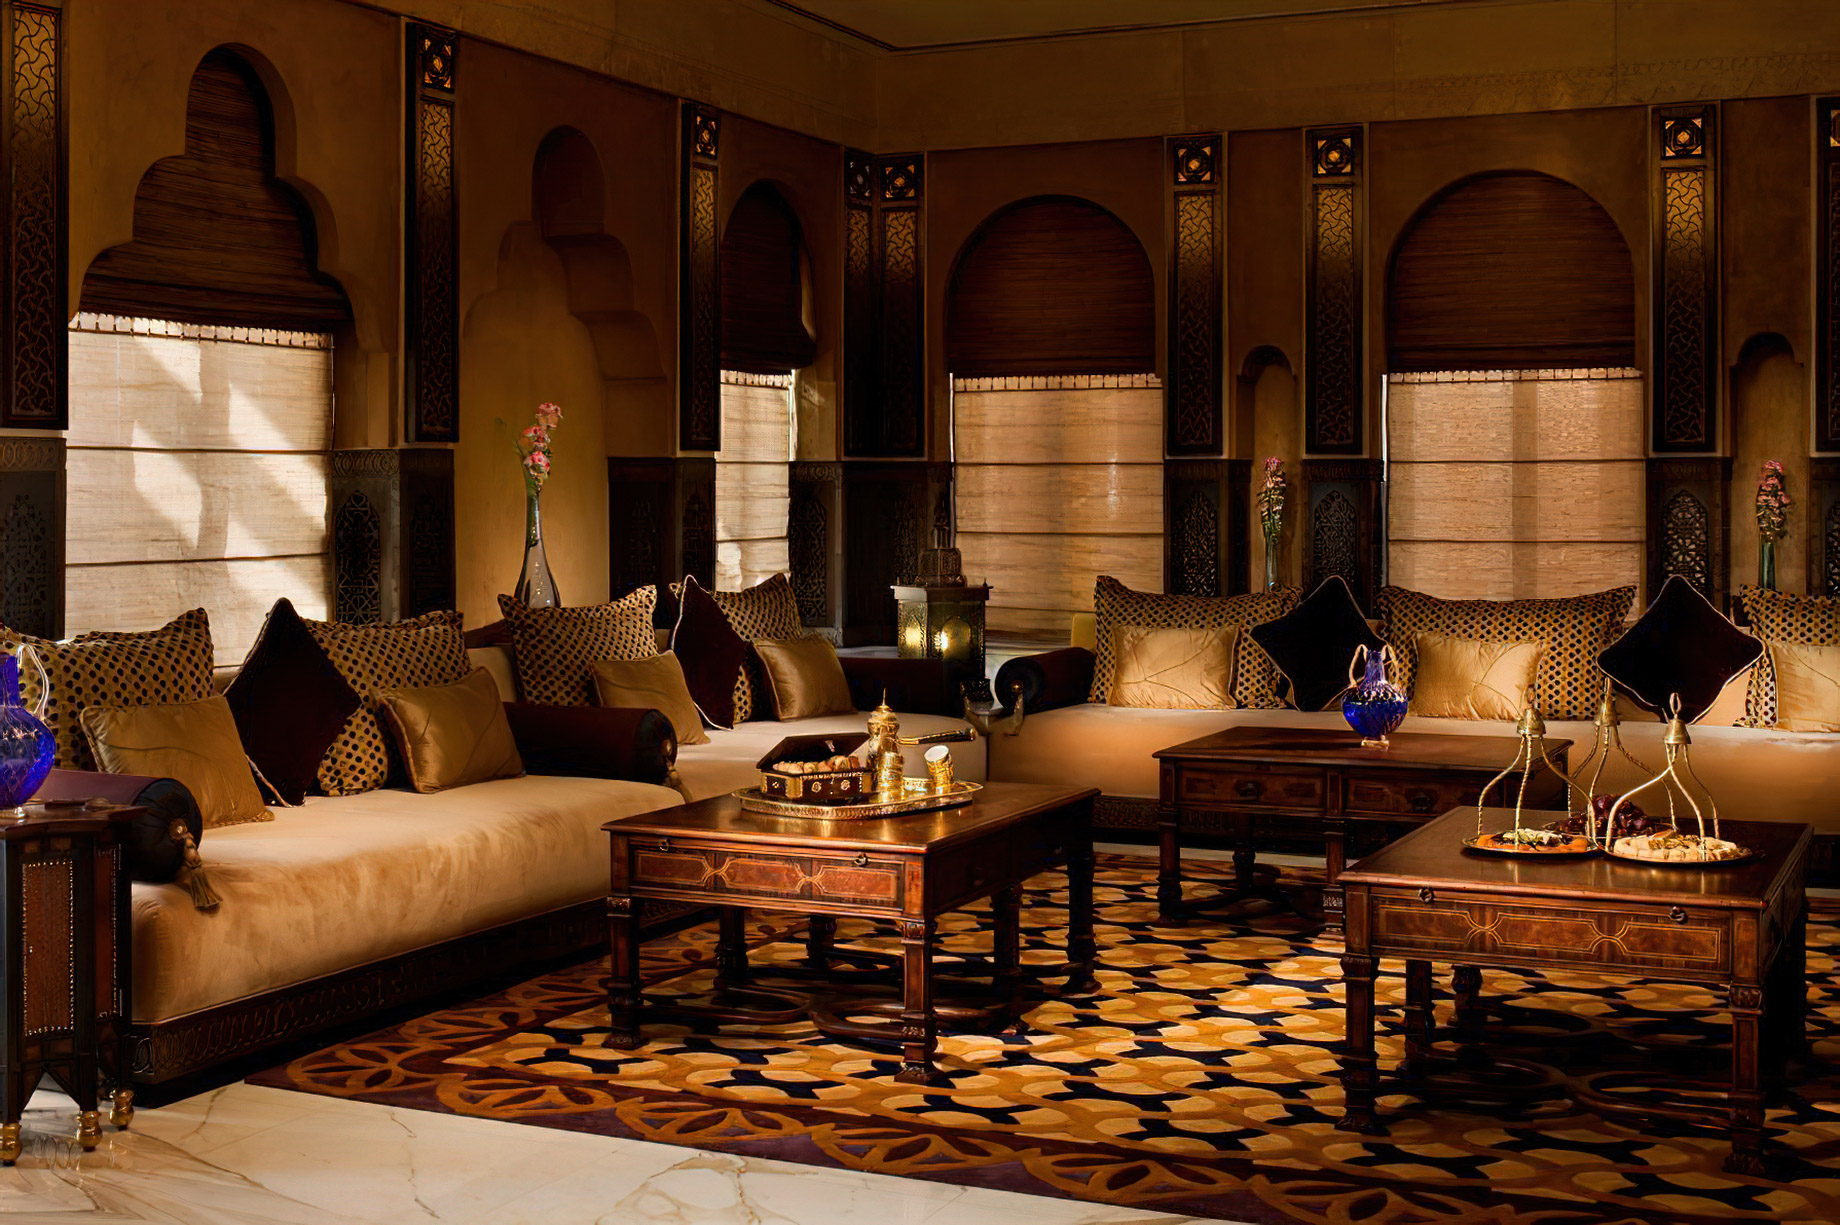 Sharq Village & Spa, A Ritz-Carlton Hotel - Doha, Qatar - Royal Villa Interior